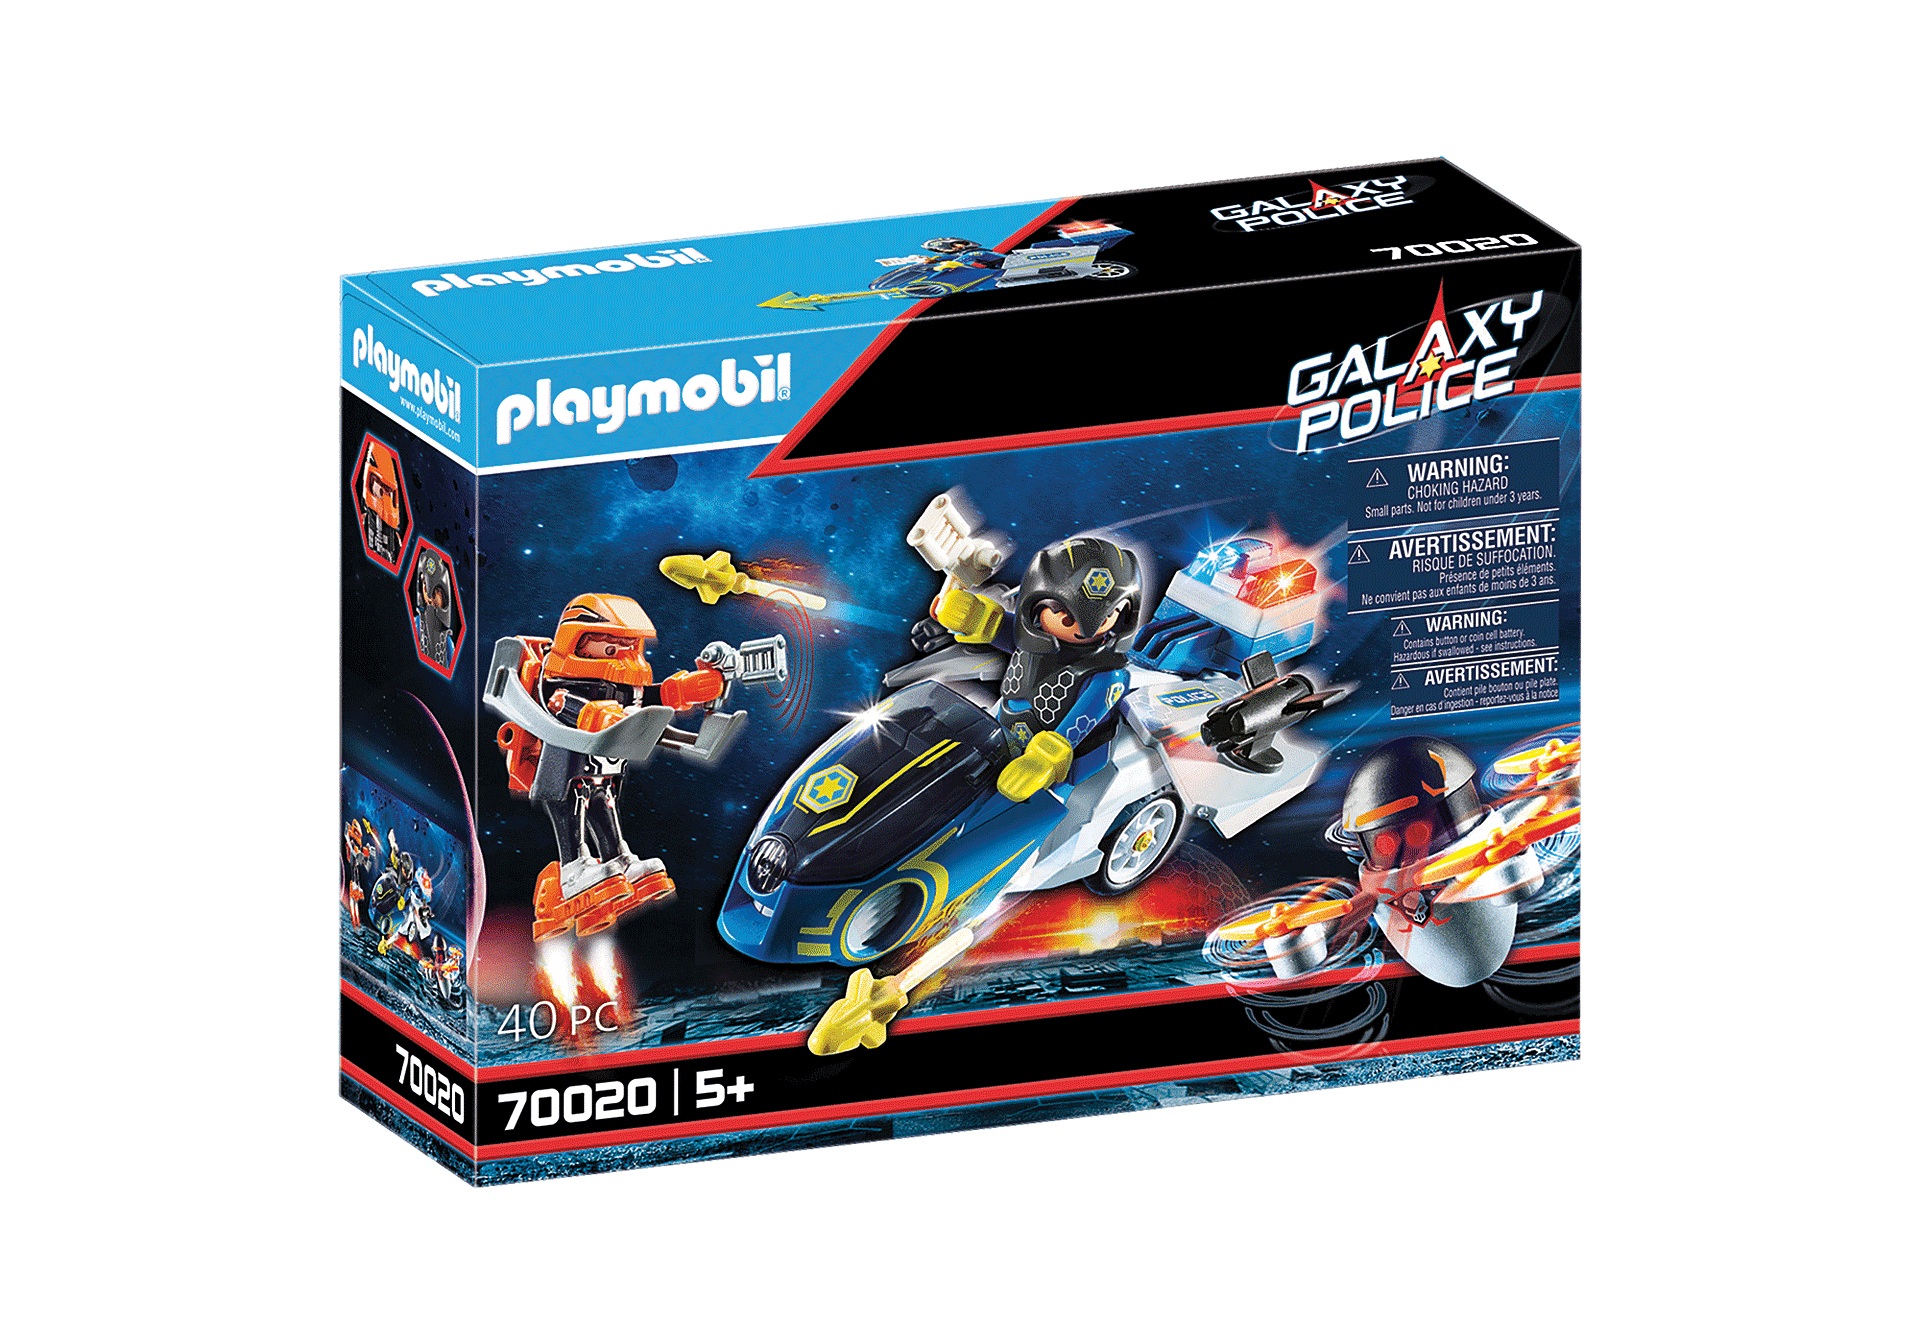 Playmobil Μοτοσικλέτα Galaxy Police